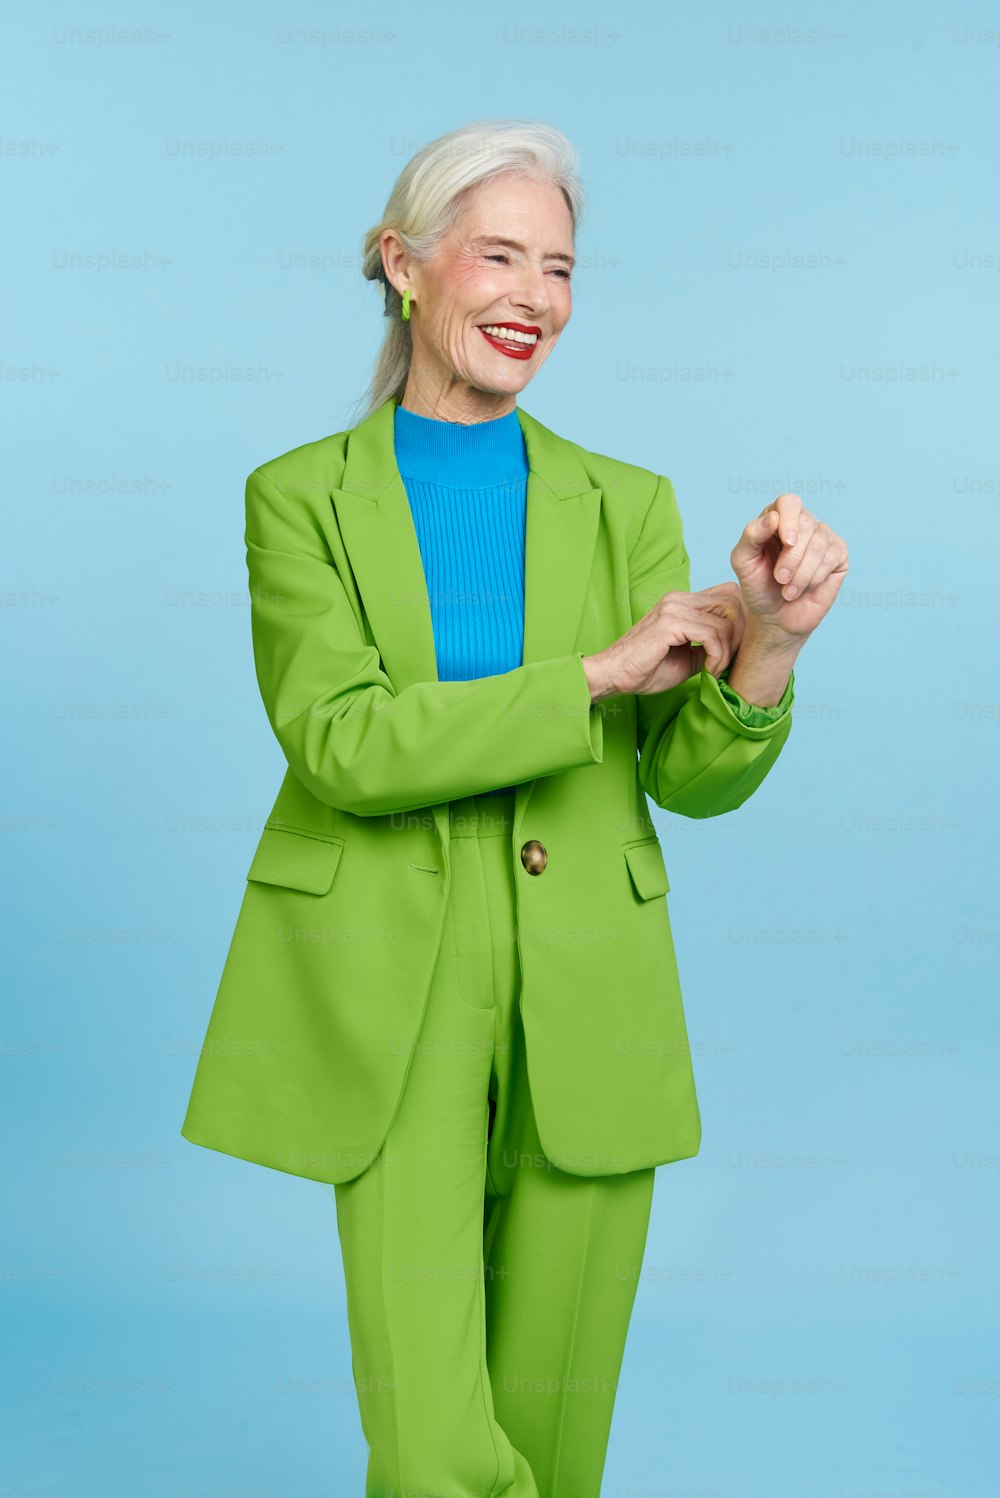 Une femme en costume vert et chemise bleue